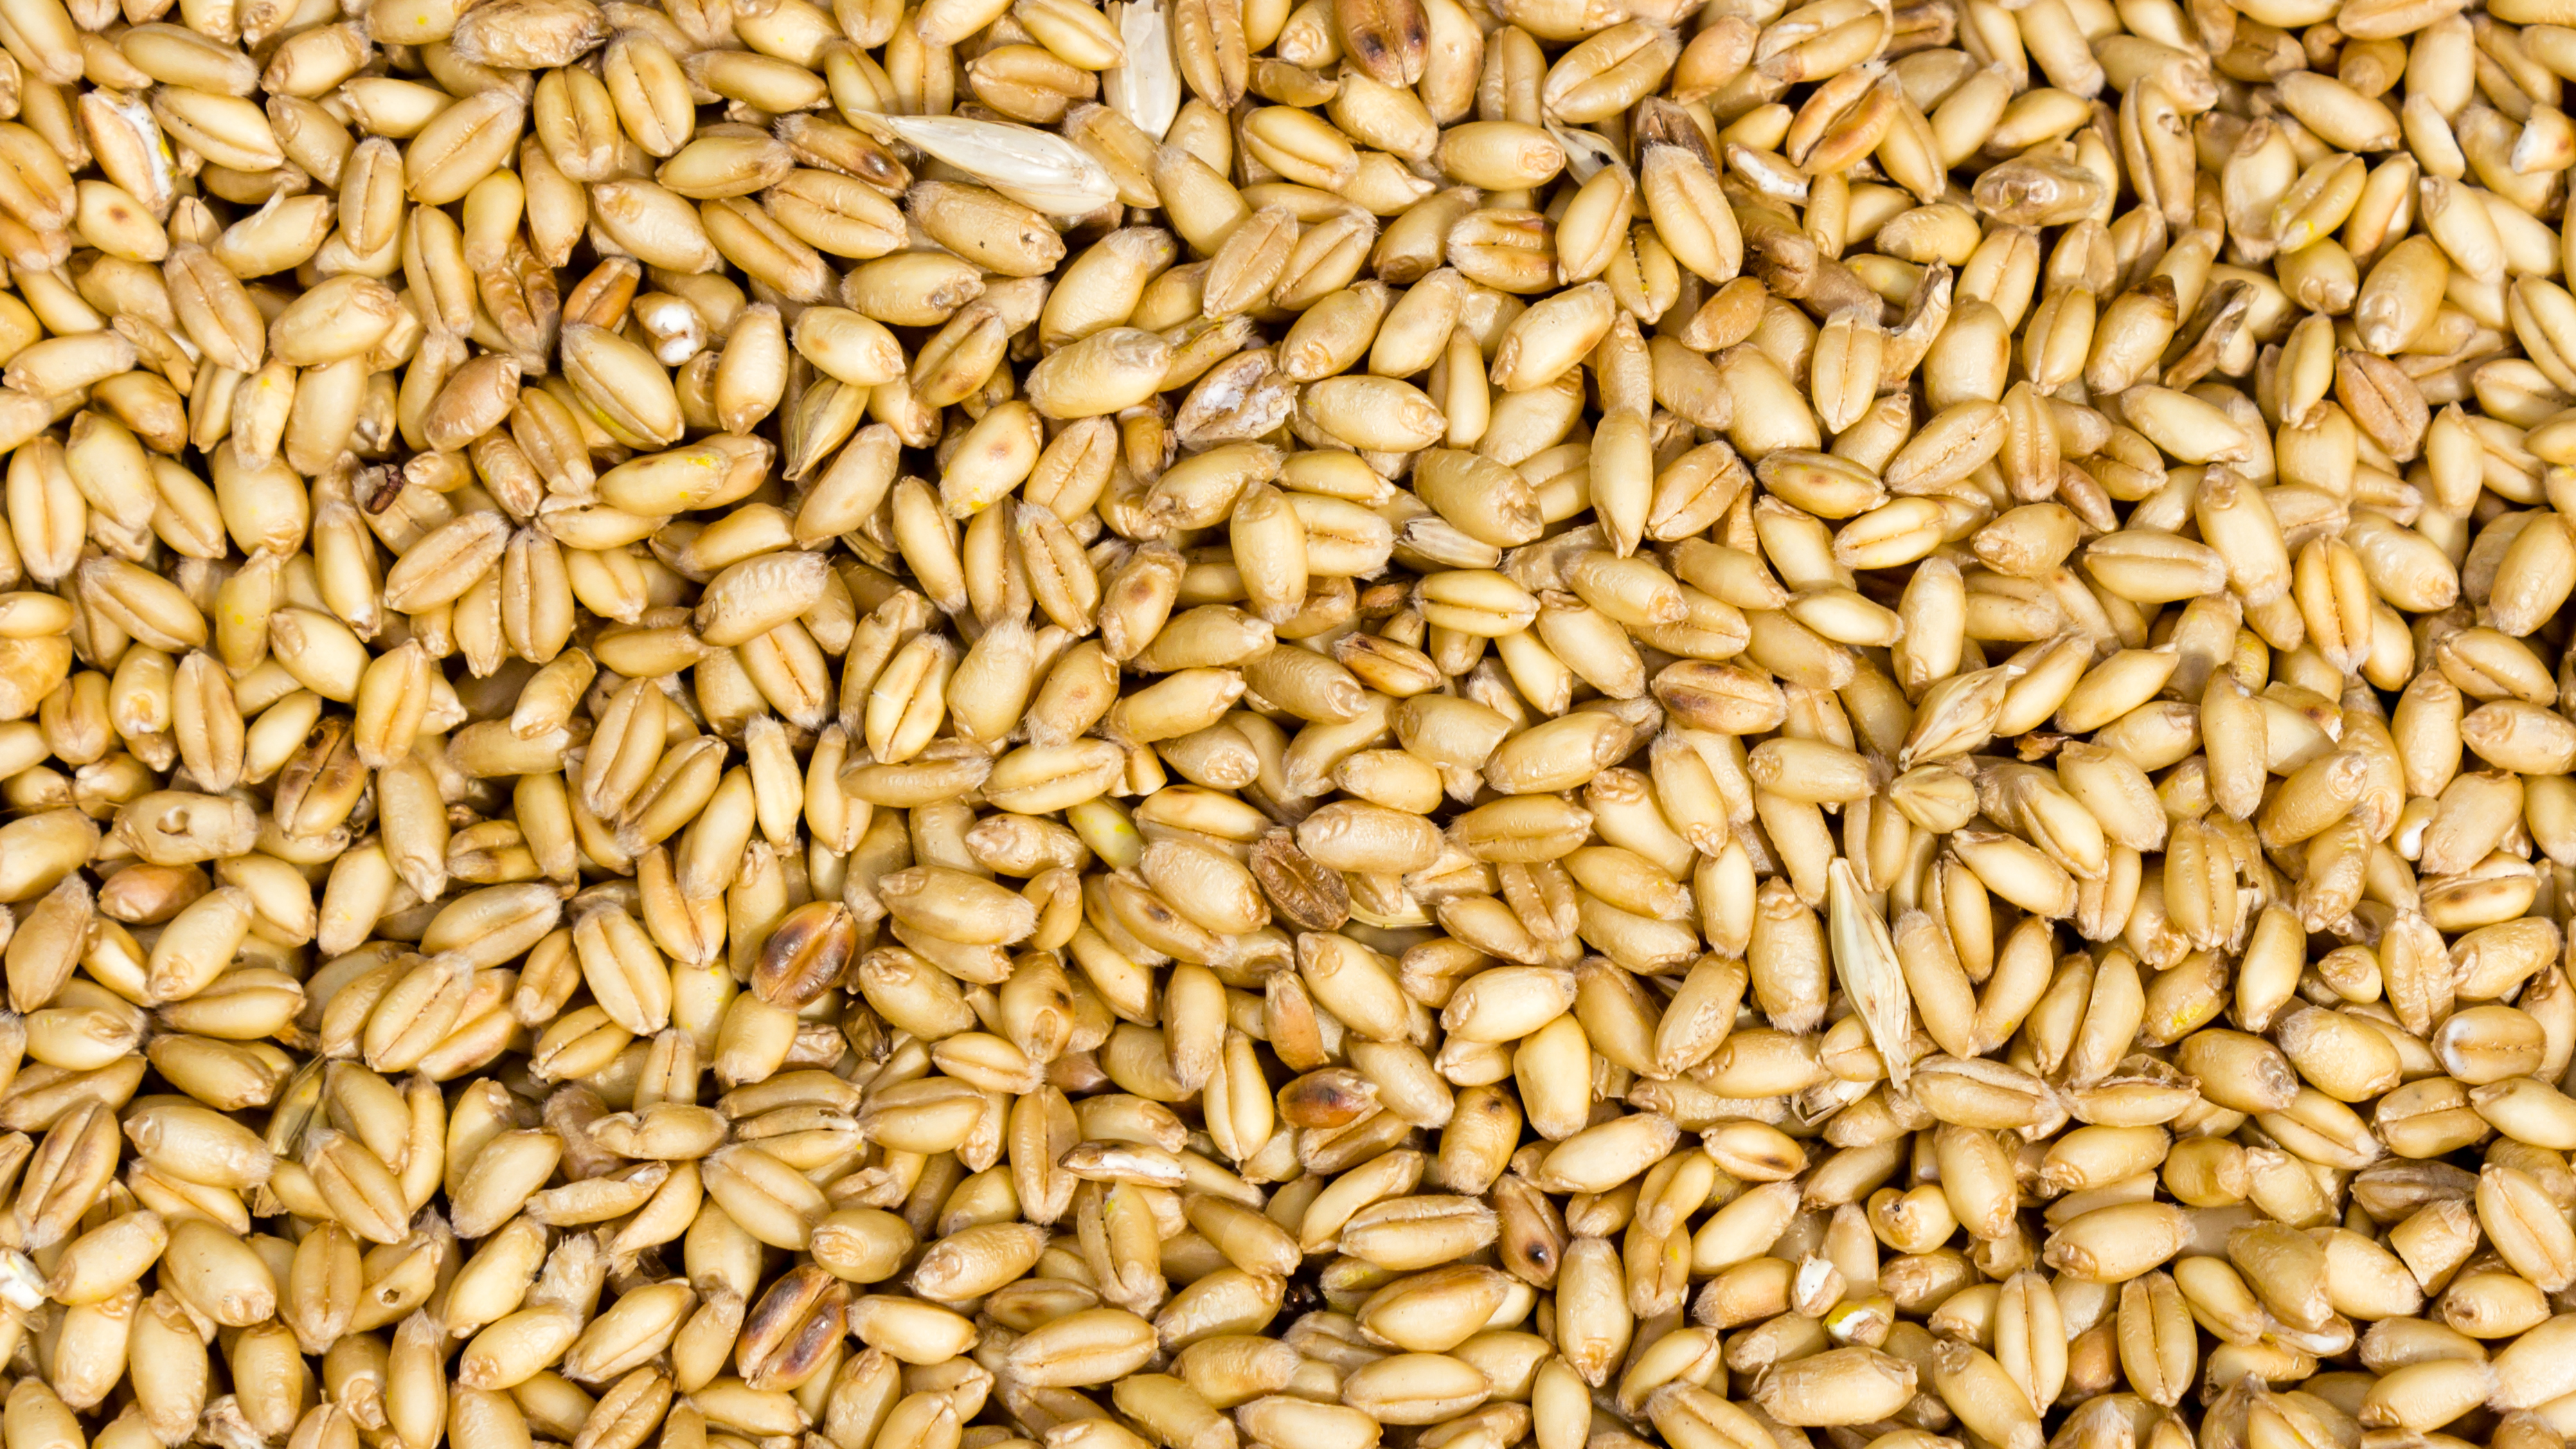 Naked wheat(Triticum aestivum) in Nepal-September 27, 2016-IMG 8015